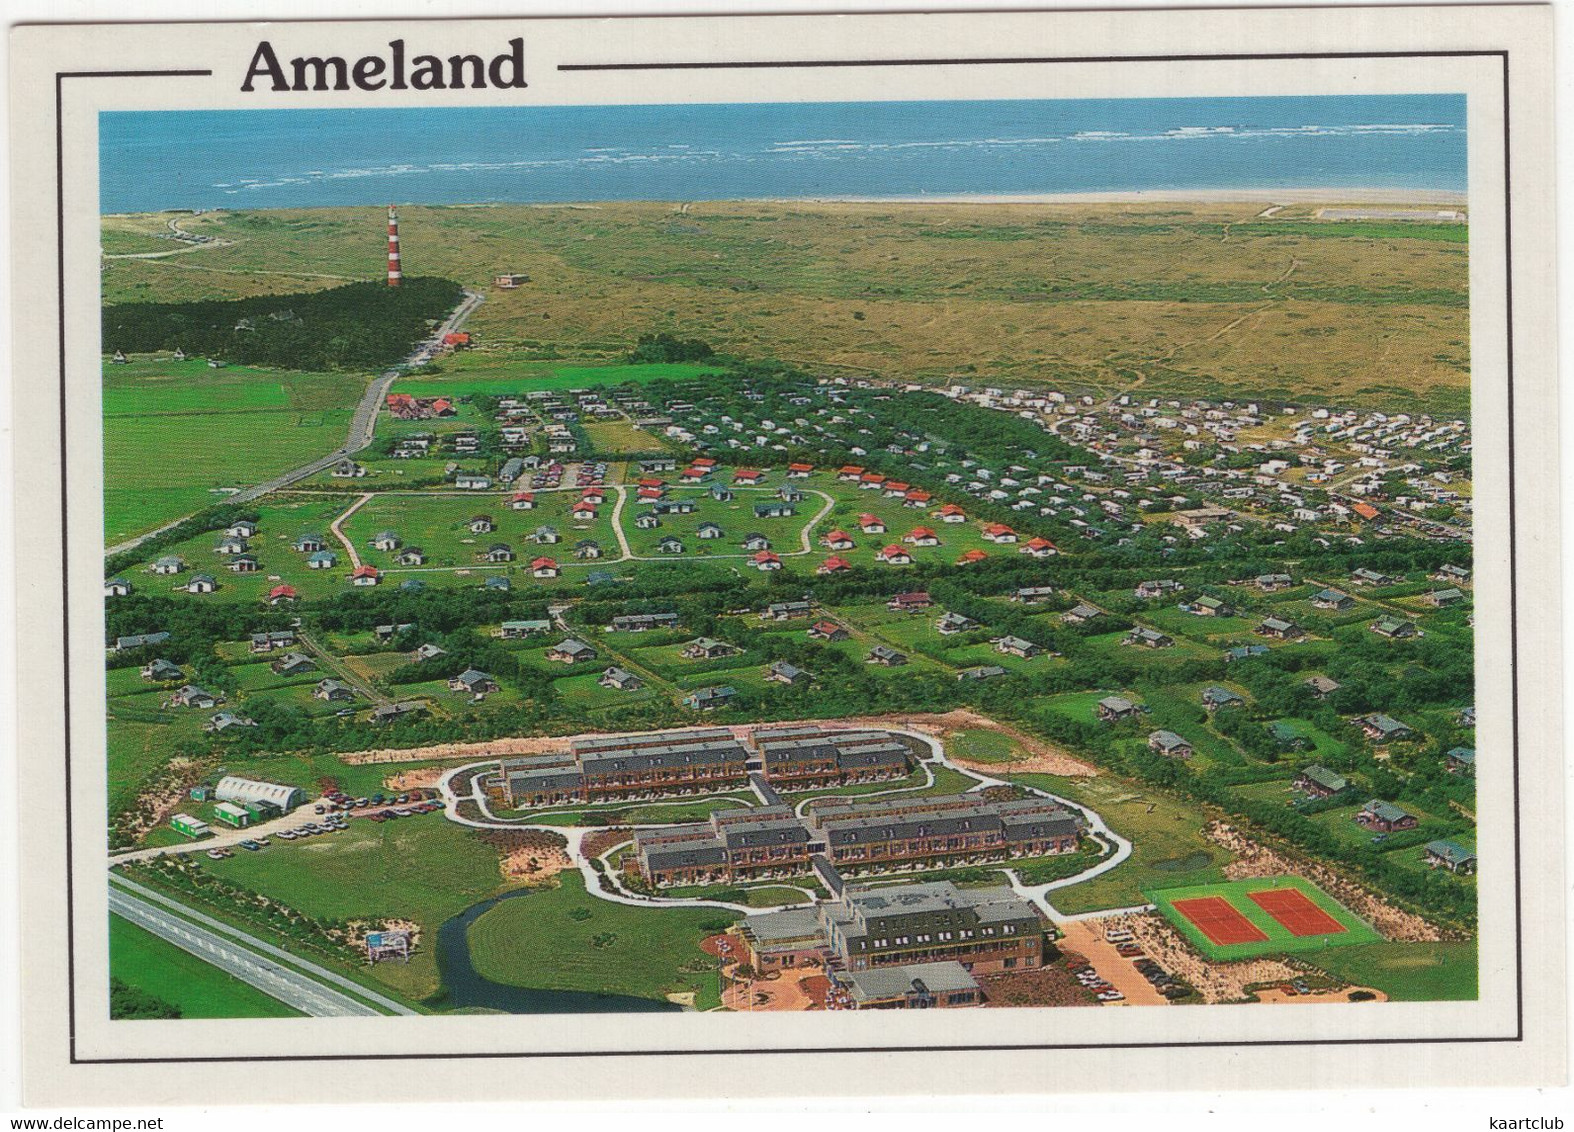 Ameland - (Wadden, Nederland / Holland) - AMD 46 - O.a. Tennis Courts - Ameland